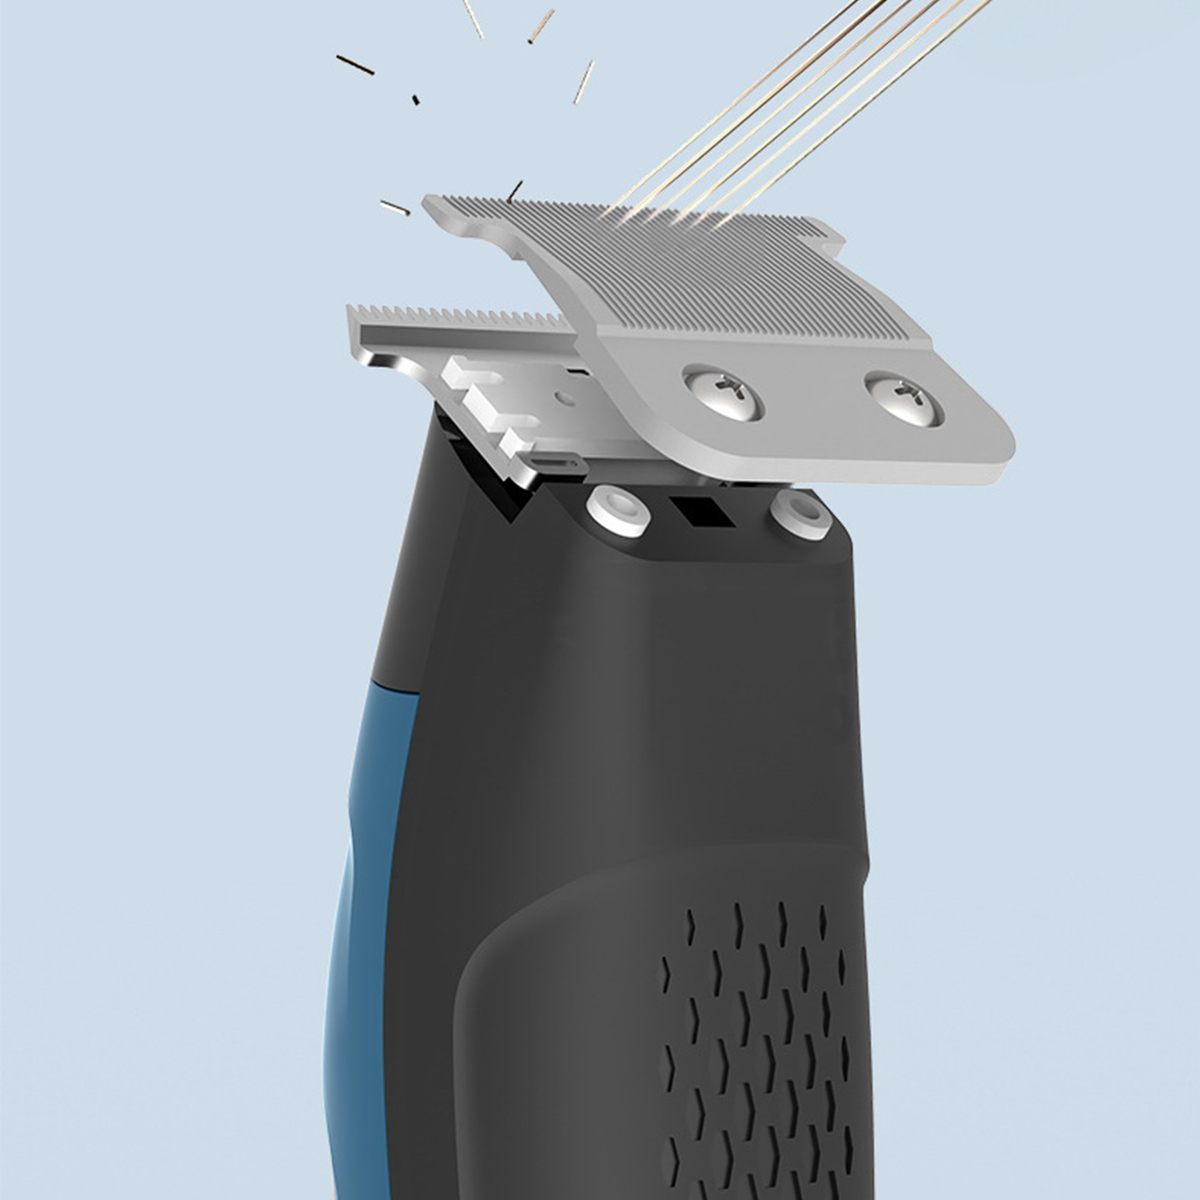 SHAOKE Kabelloser Haarschneider mit Haartrimmer-Akku abnehmbaren Edelstahlklingen LCD Grau und